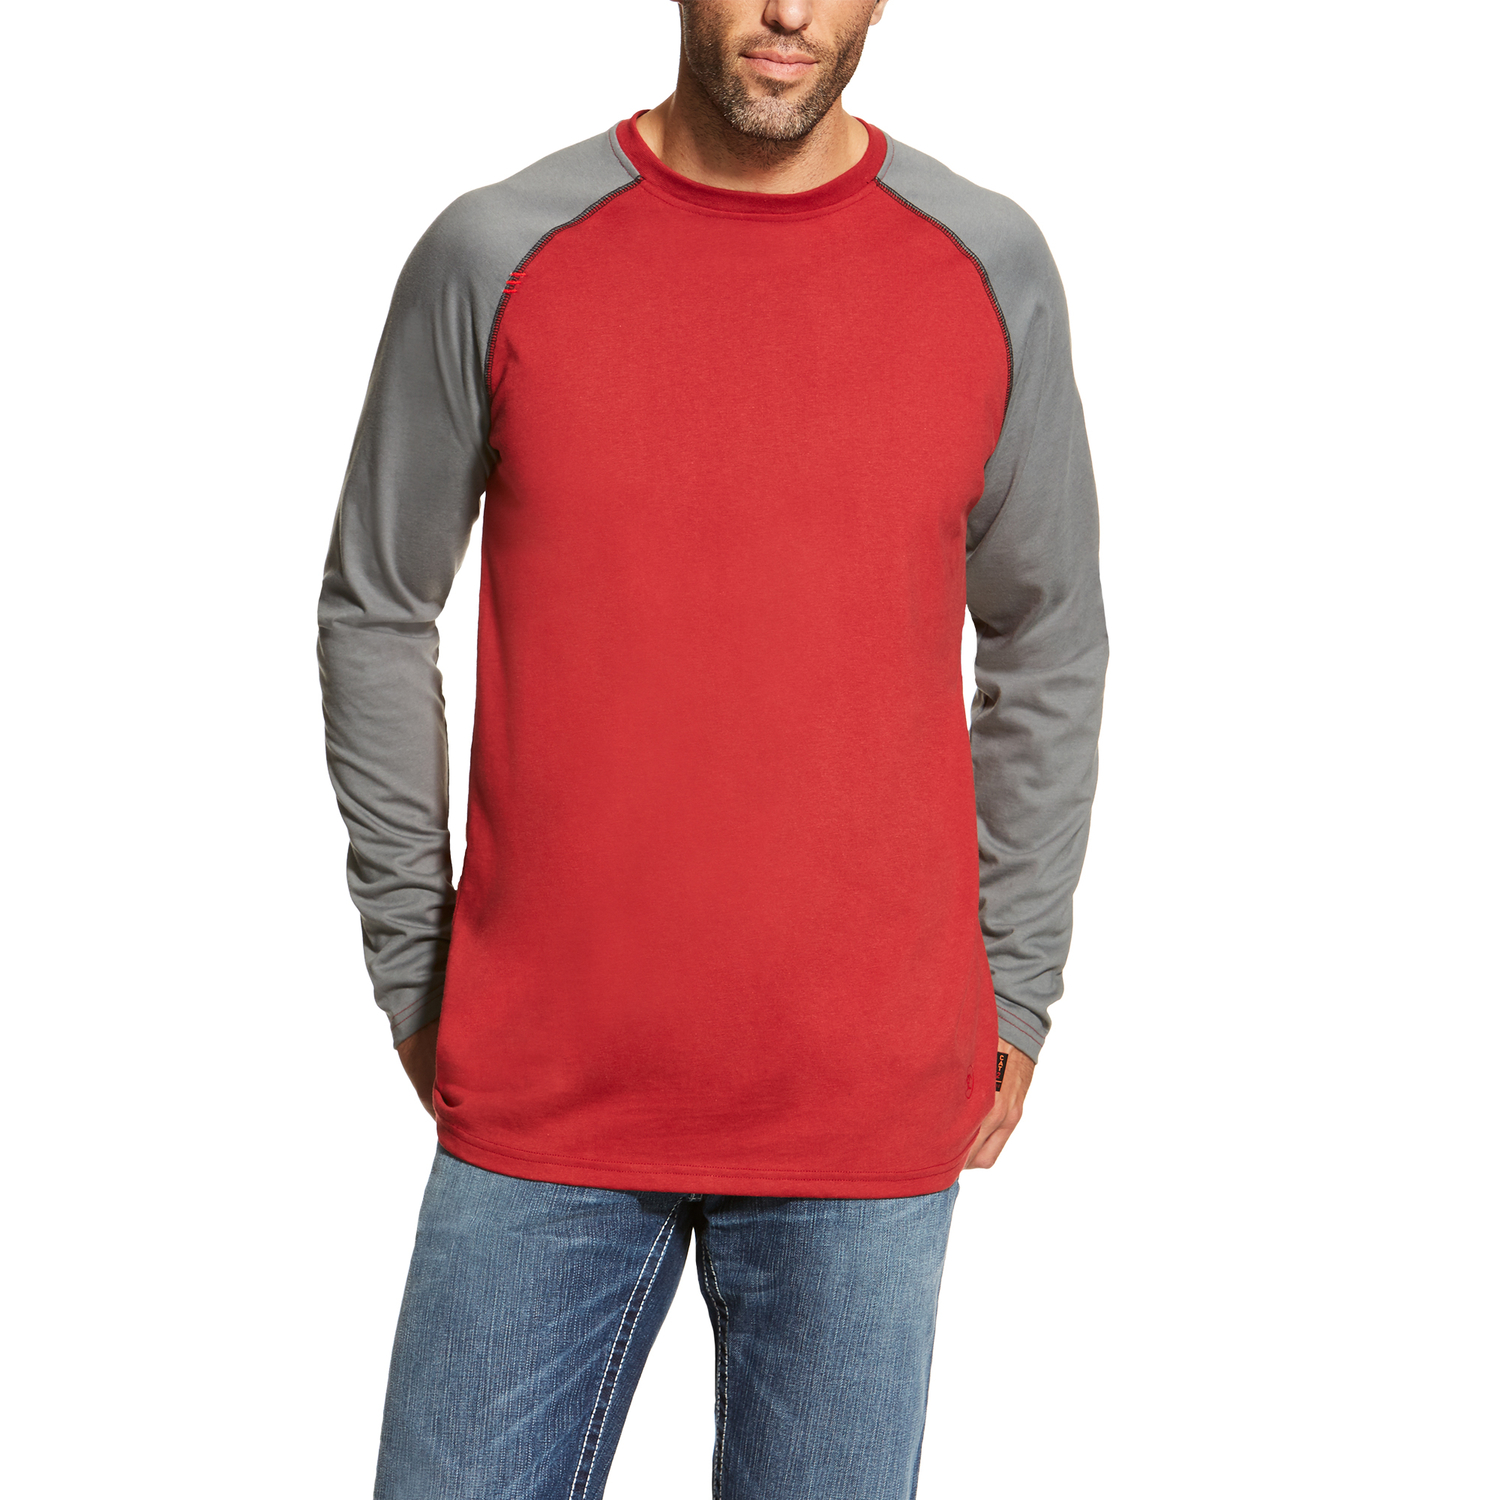 Ariat FR Baseball T-Shirt in red